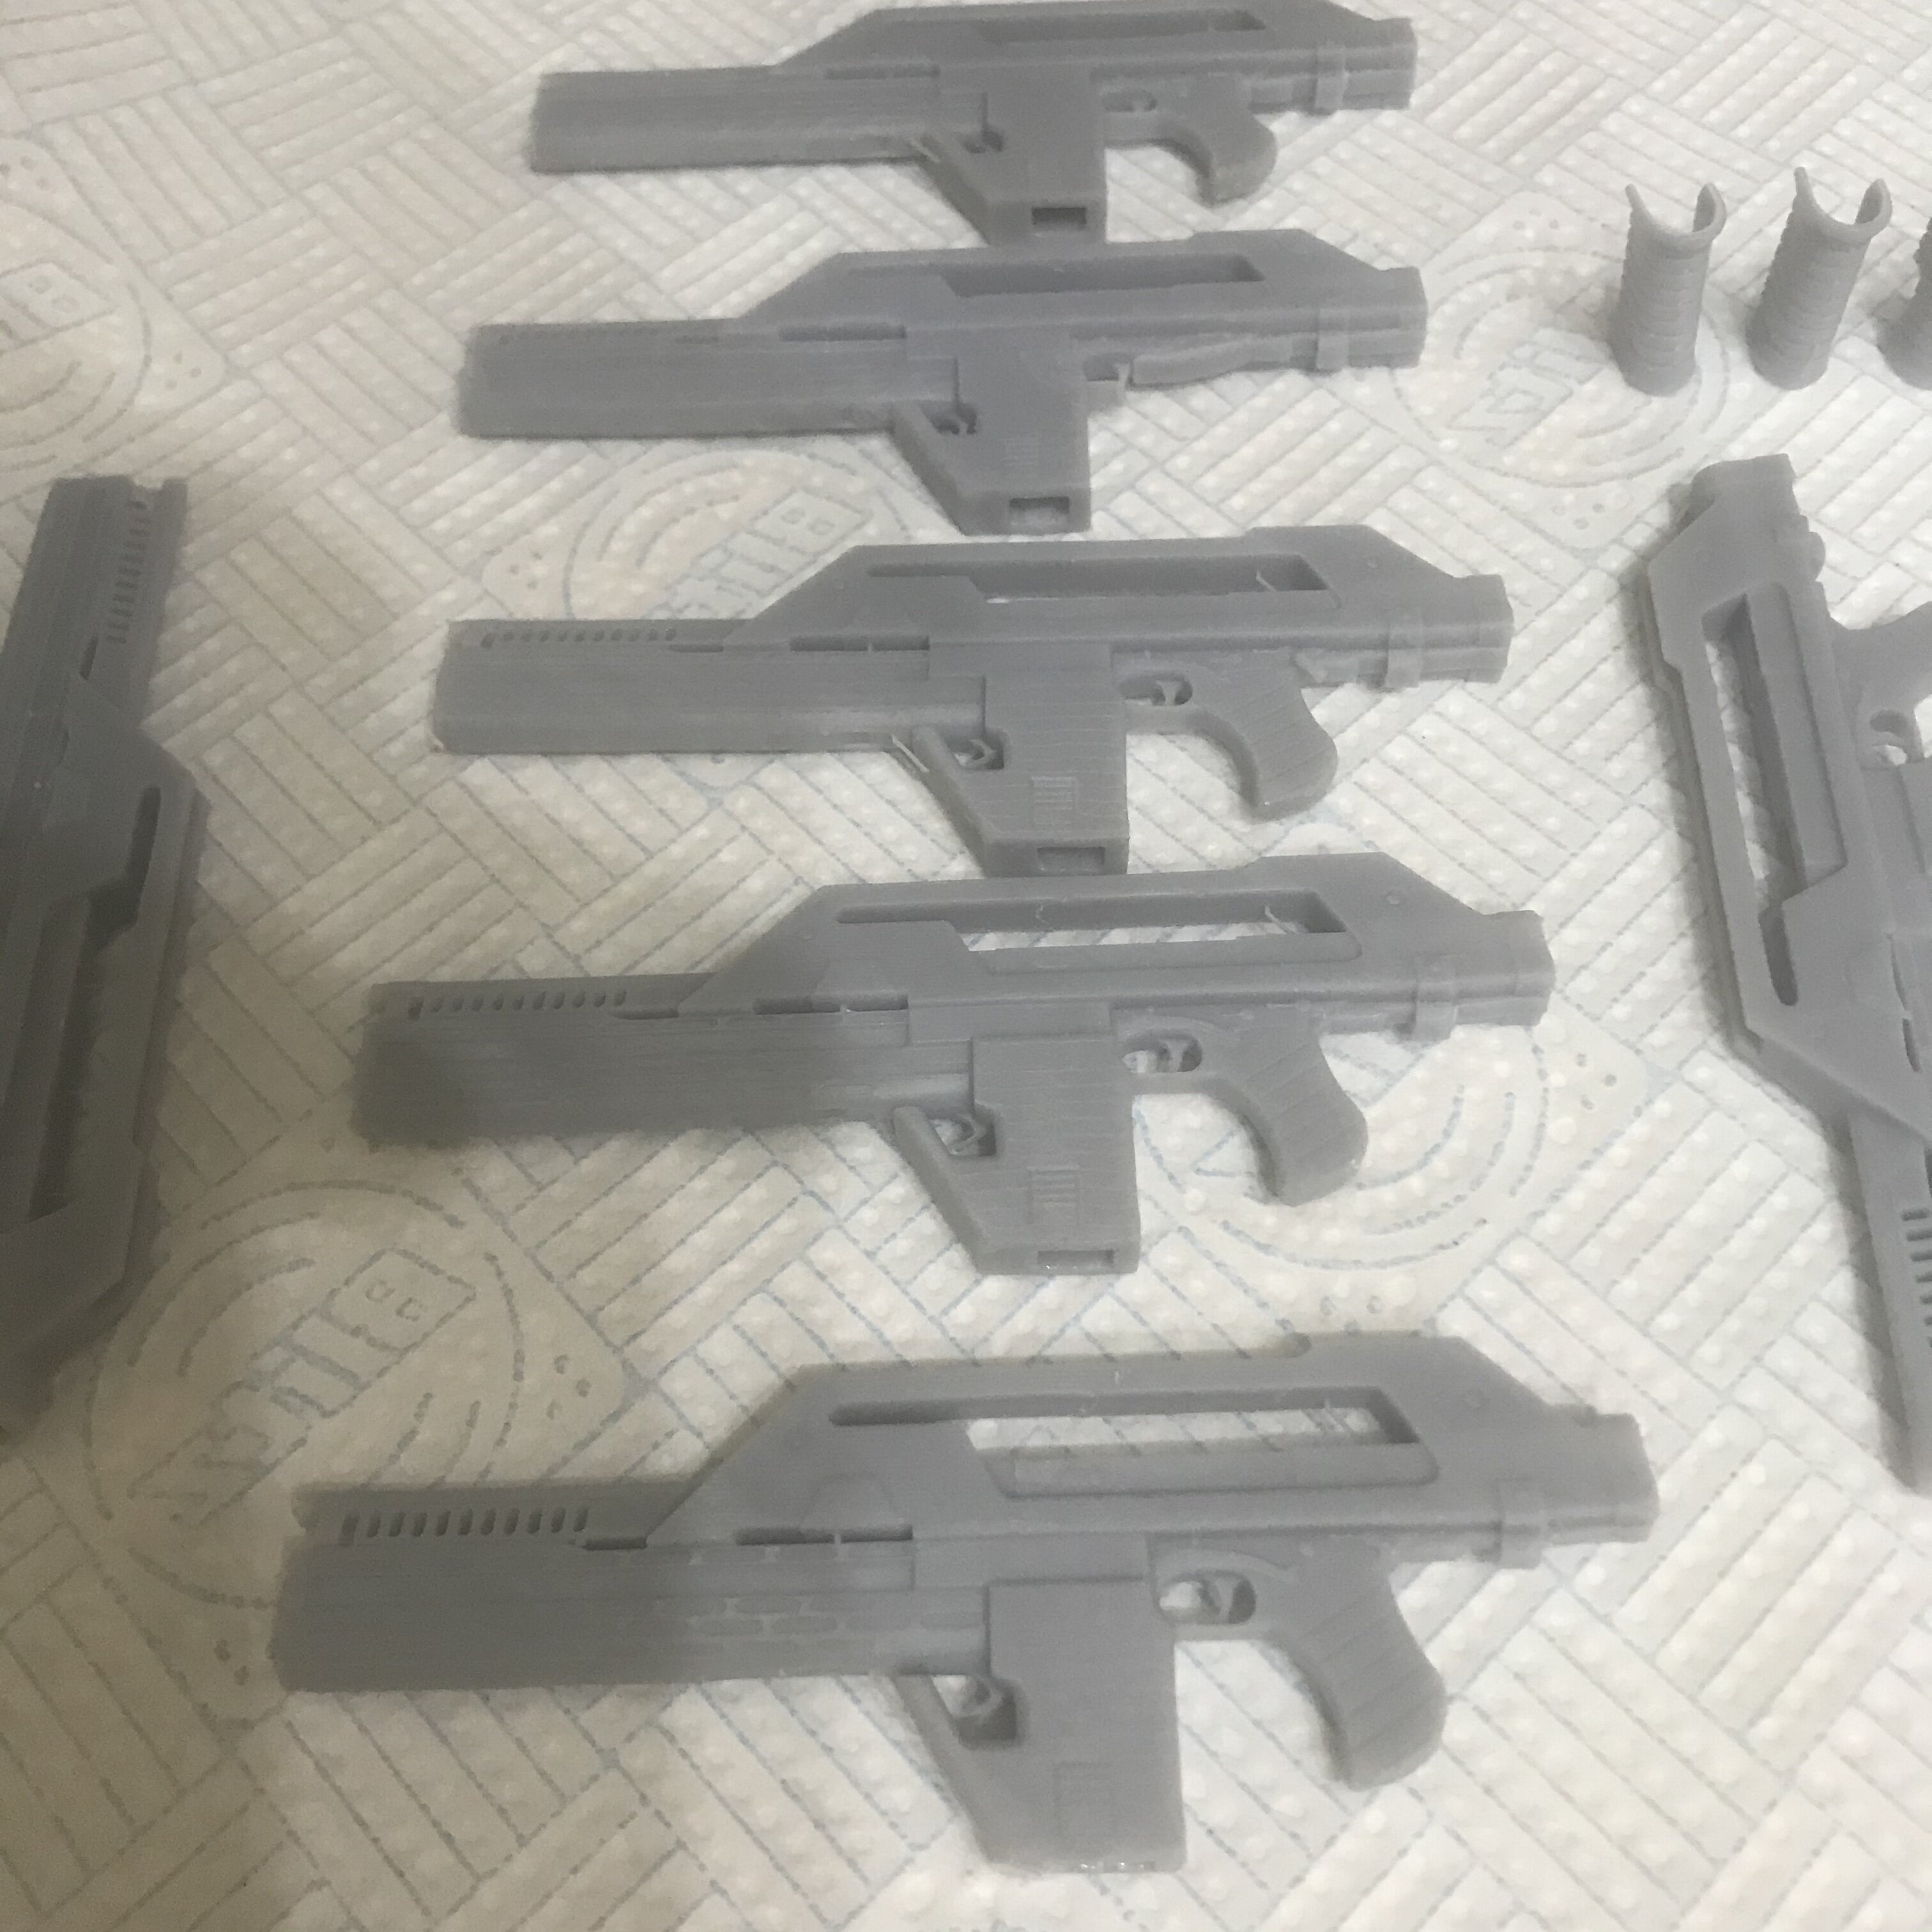 Pulse Rifle 1/6 scale 3d resin print, moving pump grip etc | RPF ...